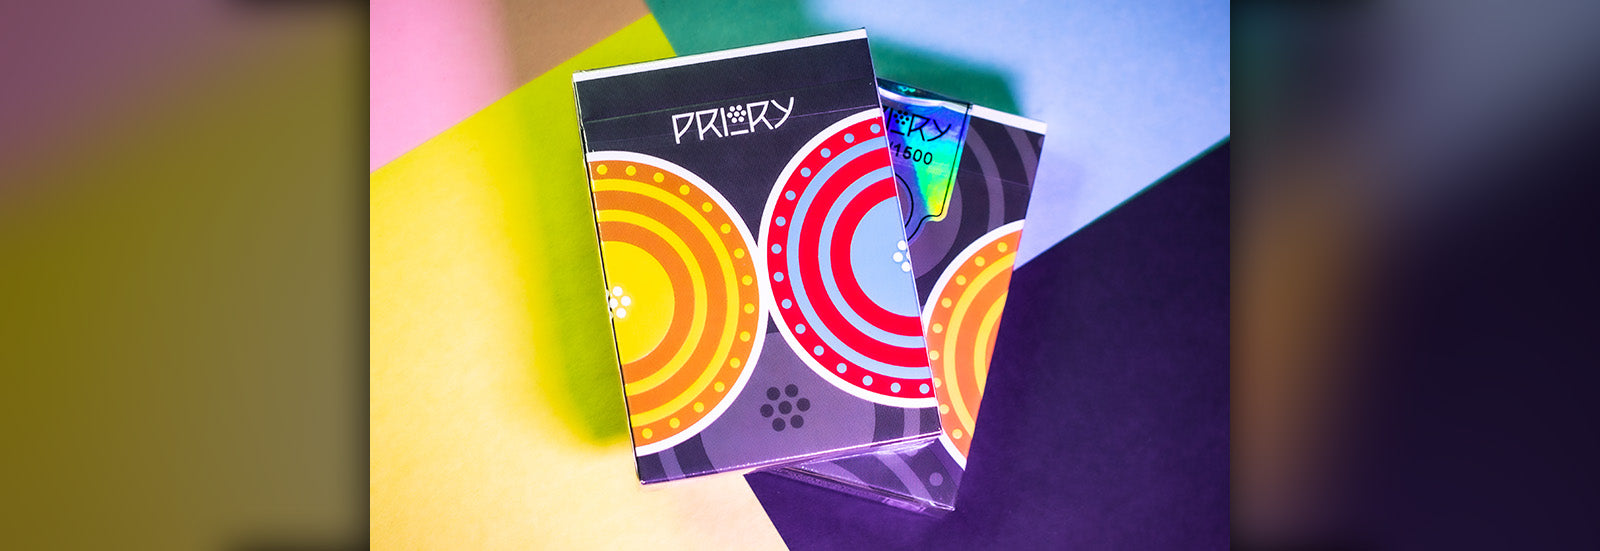 Priory - Primary Edition